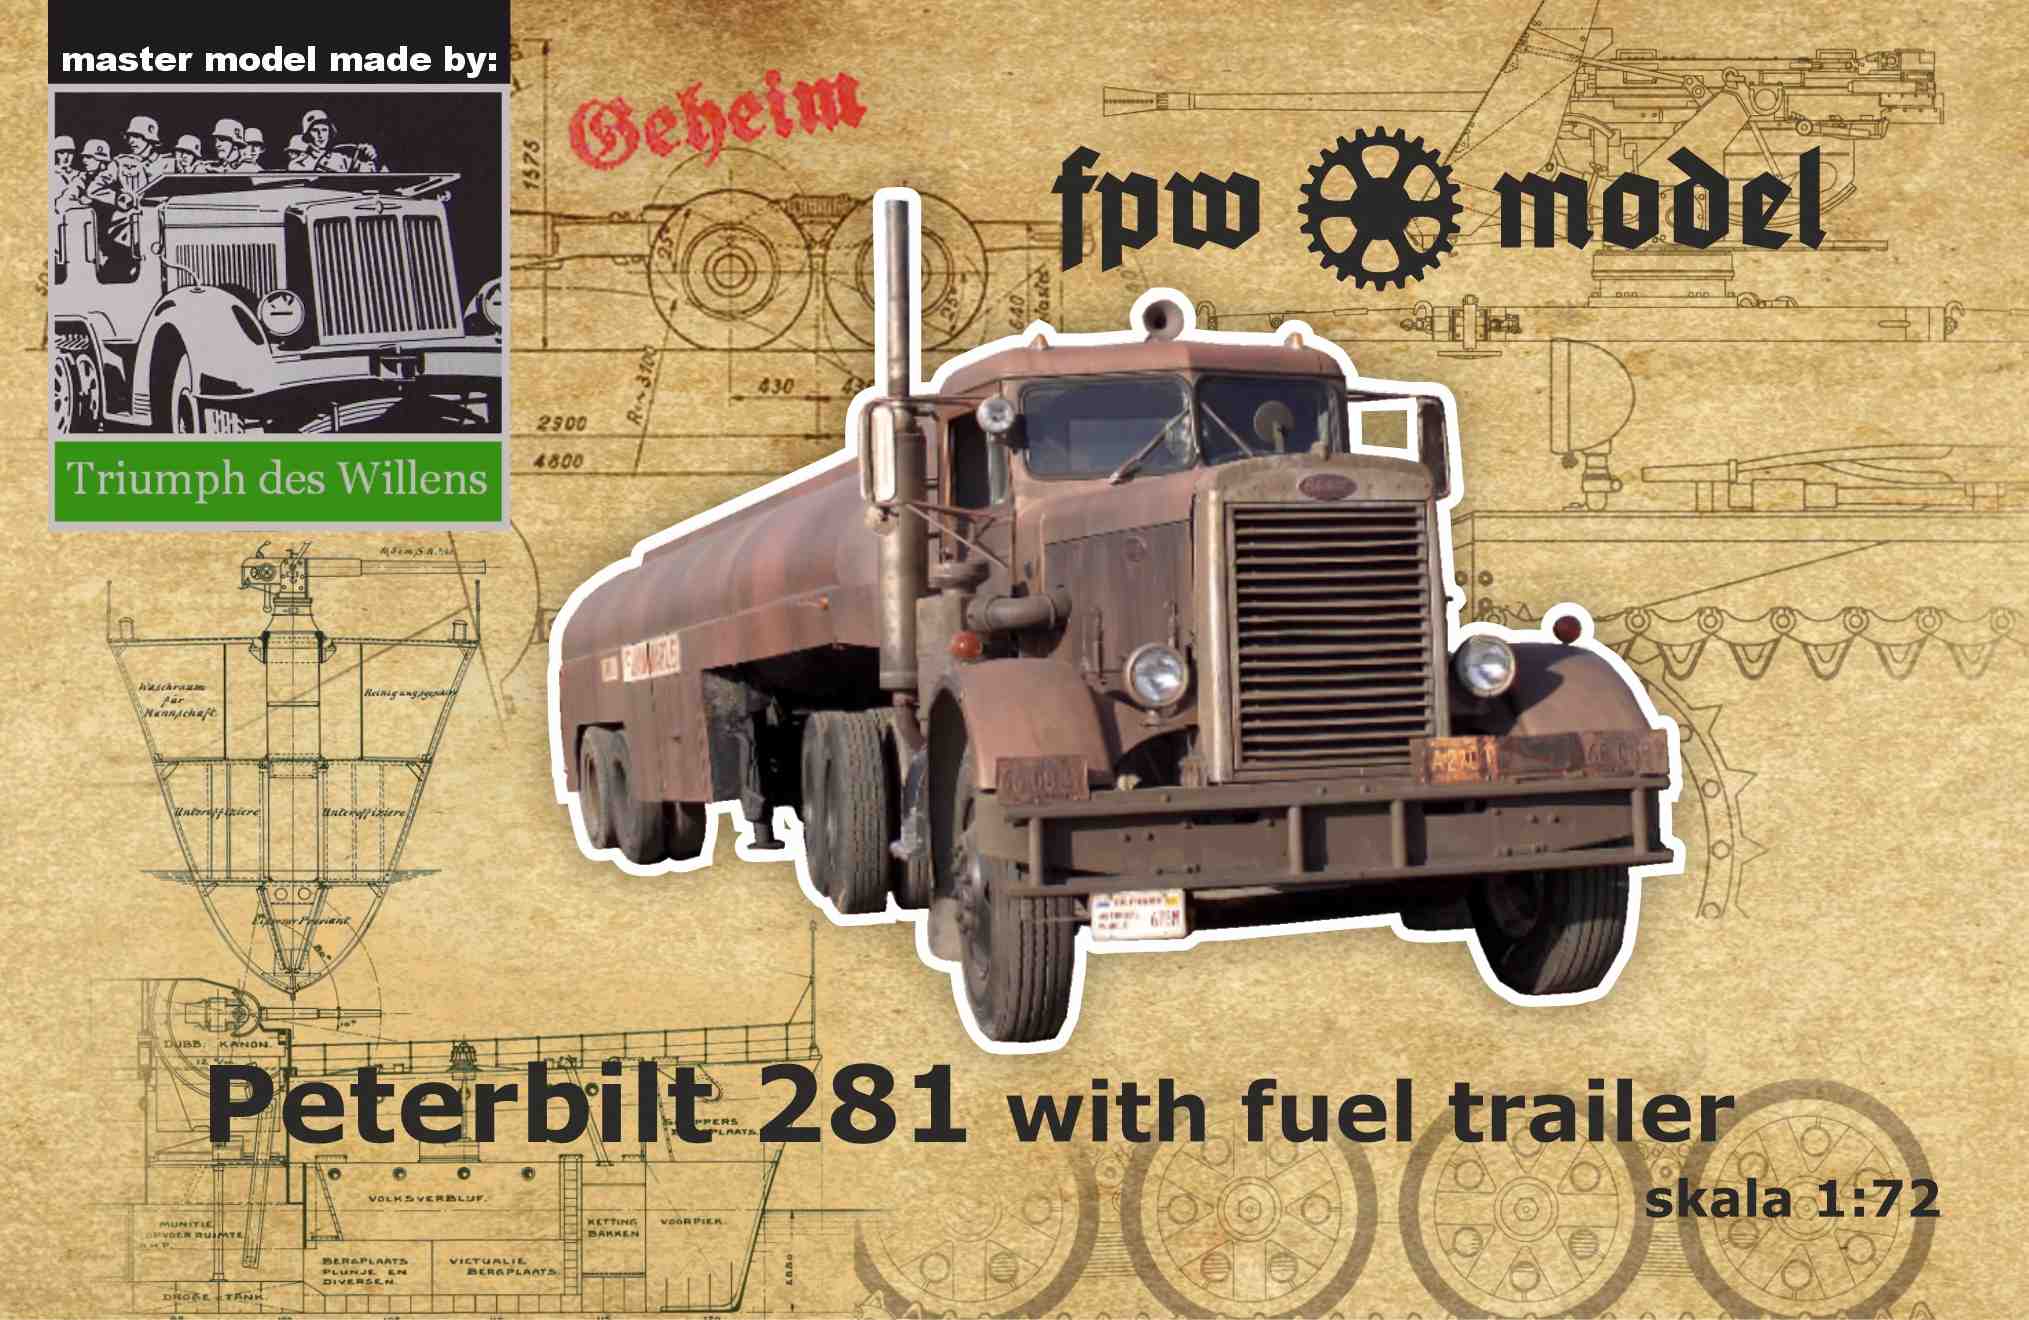 Peterbilt 281 with fuel trailer